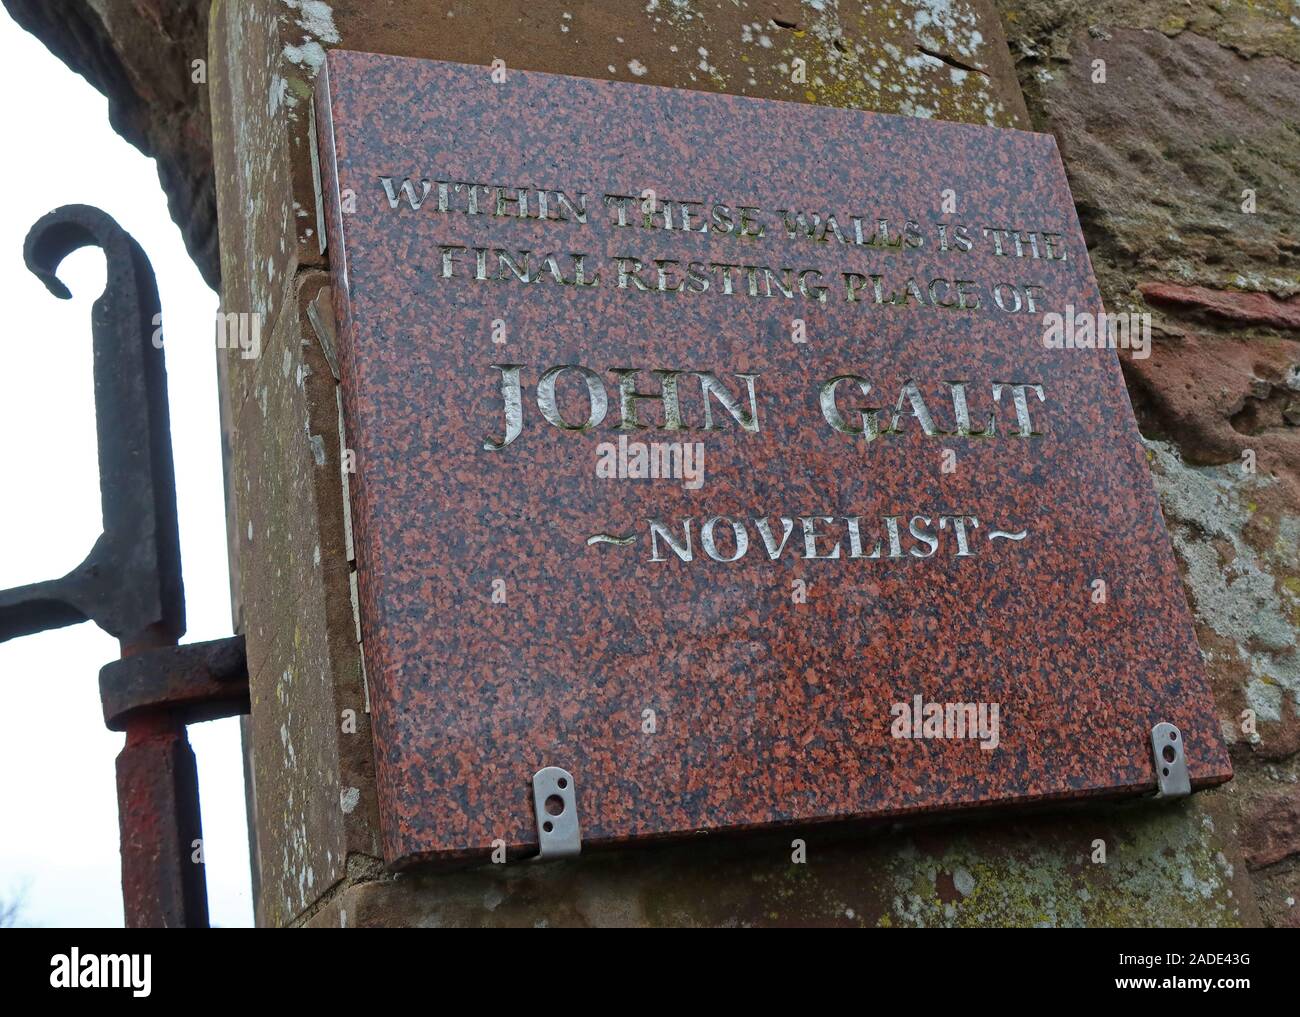 John Galt, romancier, Greenock, Inverkip Street Cemetery, Greenock, Inverclyde, écosse, Royaume-Uni, grave, plaque du dernier lieu de repos Banque D'Images